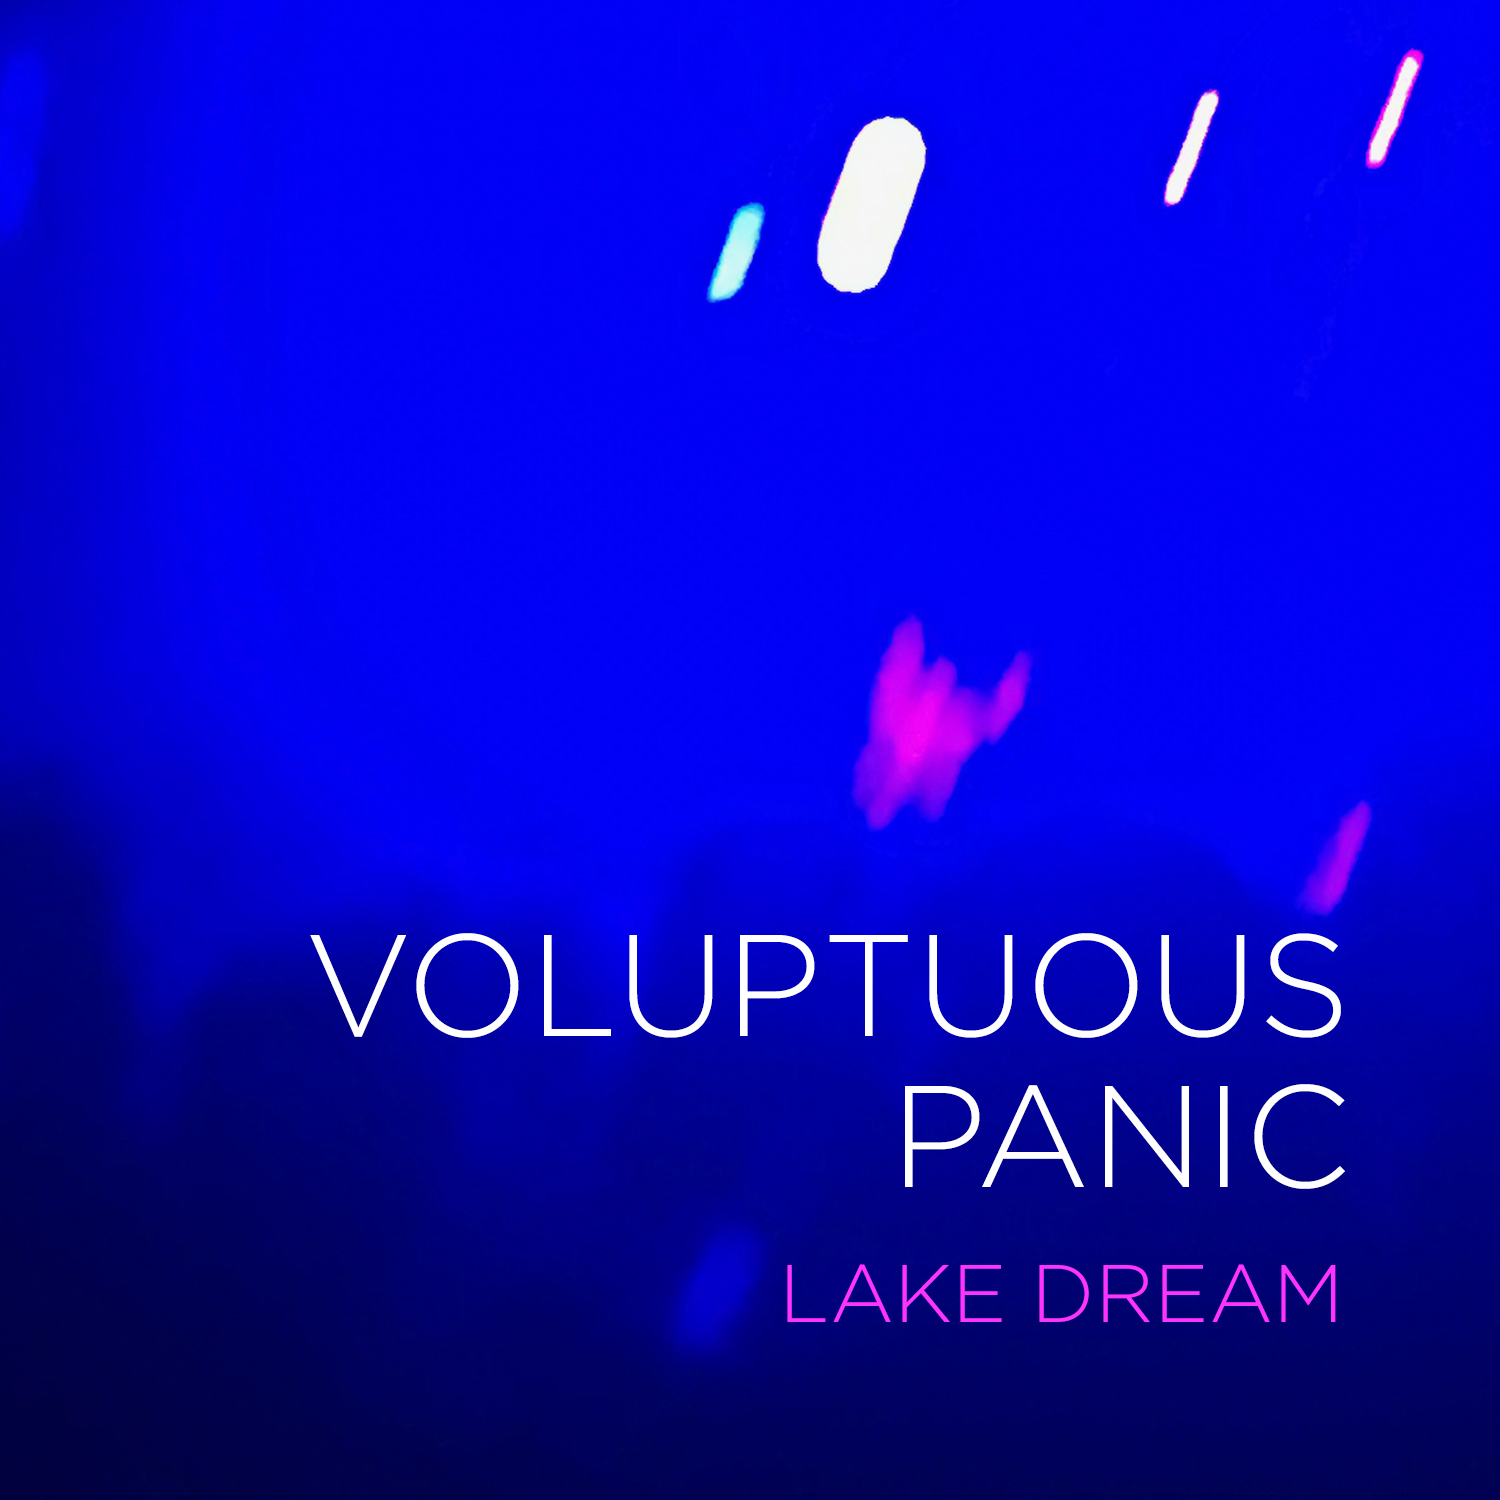 Lake Dream by Voluptuous Panic